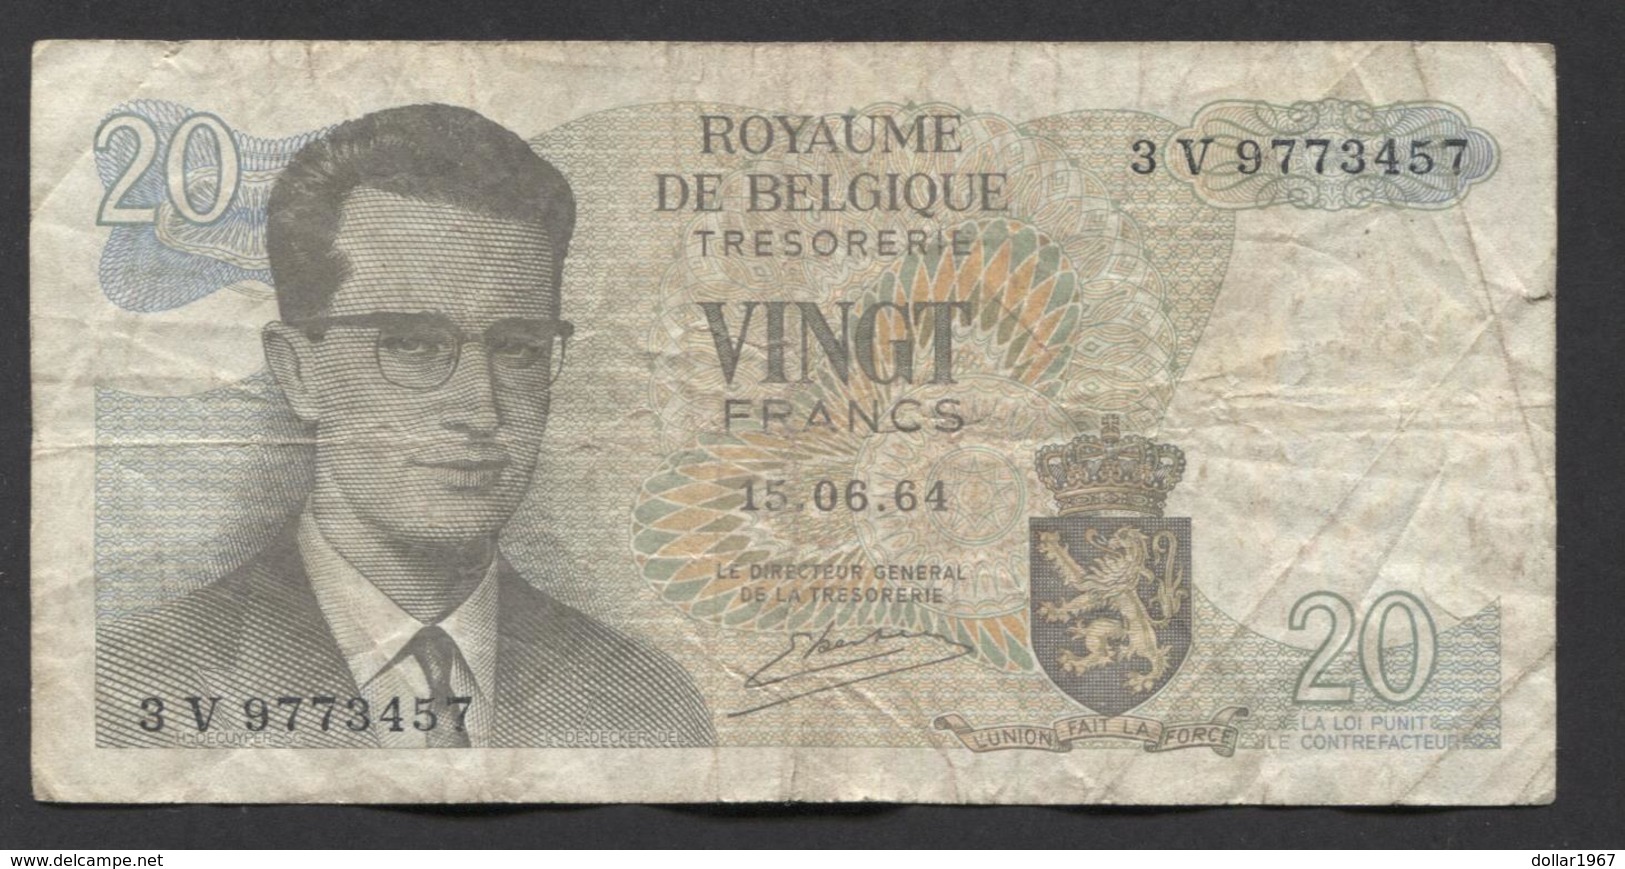 België Belgique Belgium 15 06 1964 -  20 Francs Atomium Baudouin. 3 V  9773457 - 20 Franchi